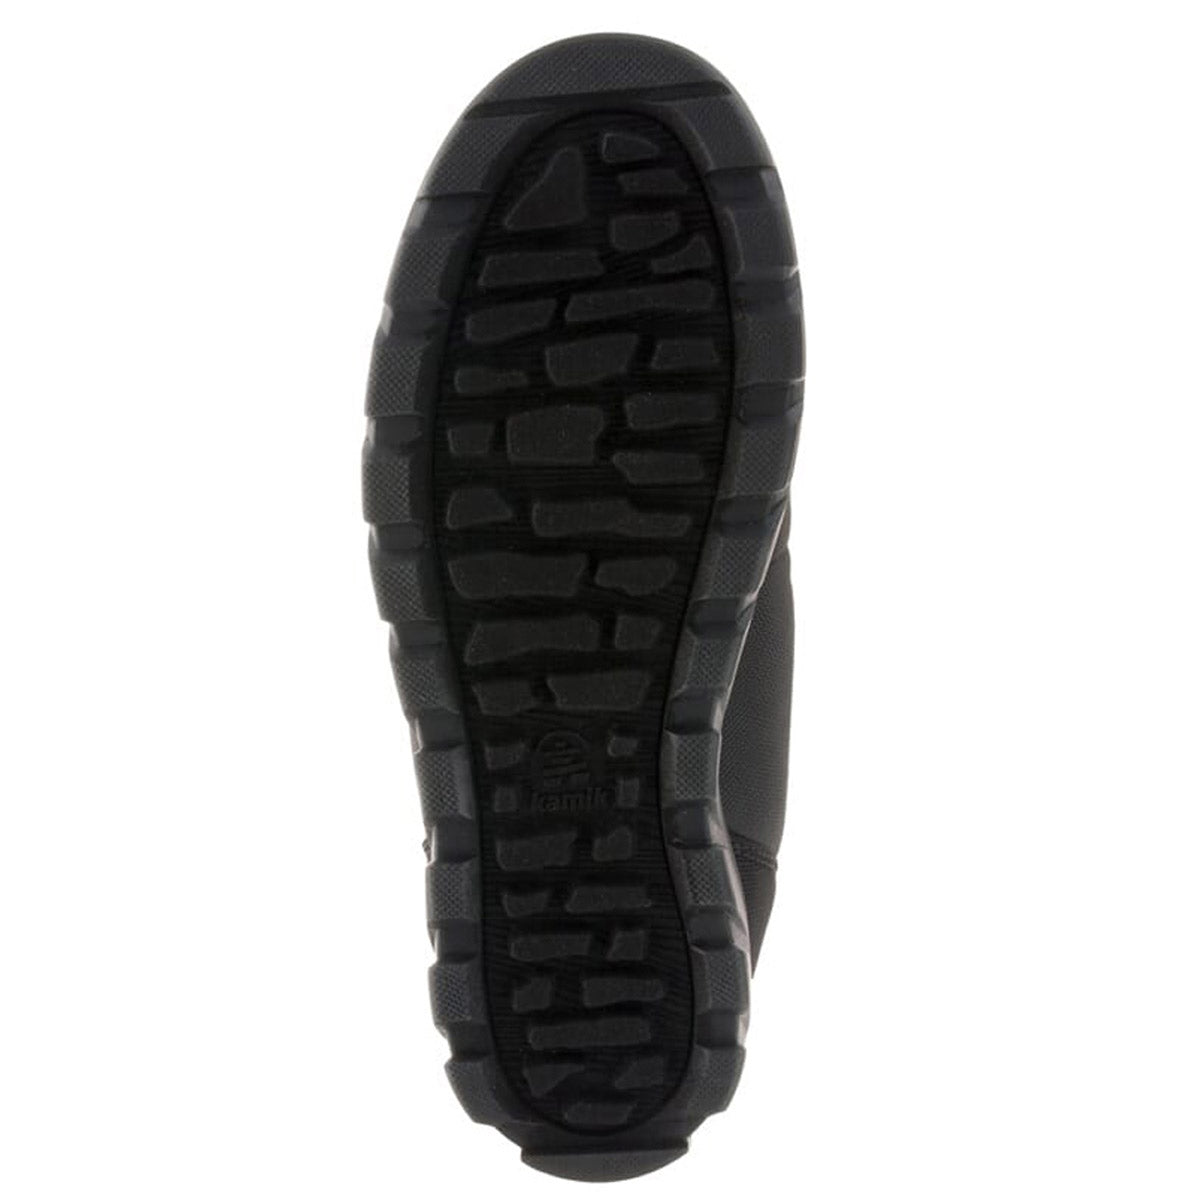 Kamik black vegan-friendly shoe sole with tread pattern.